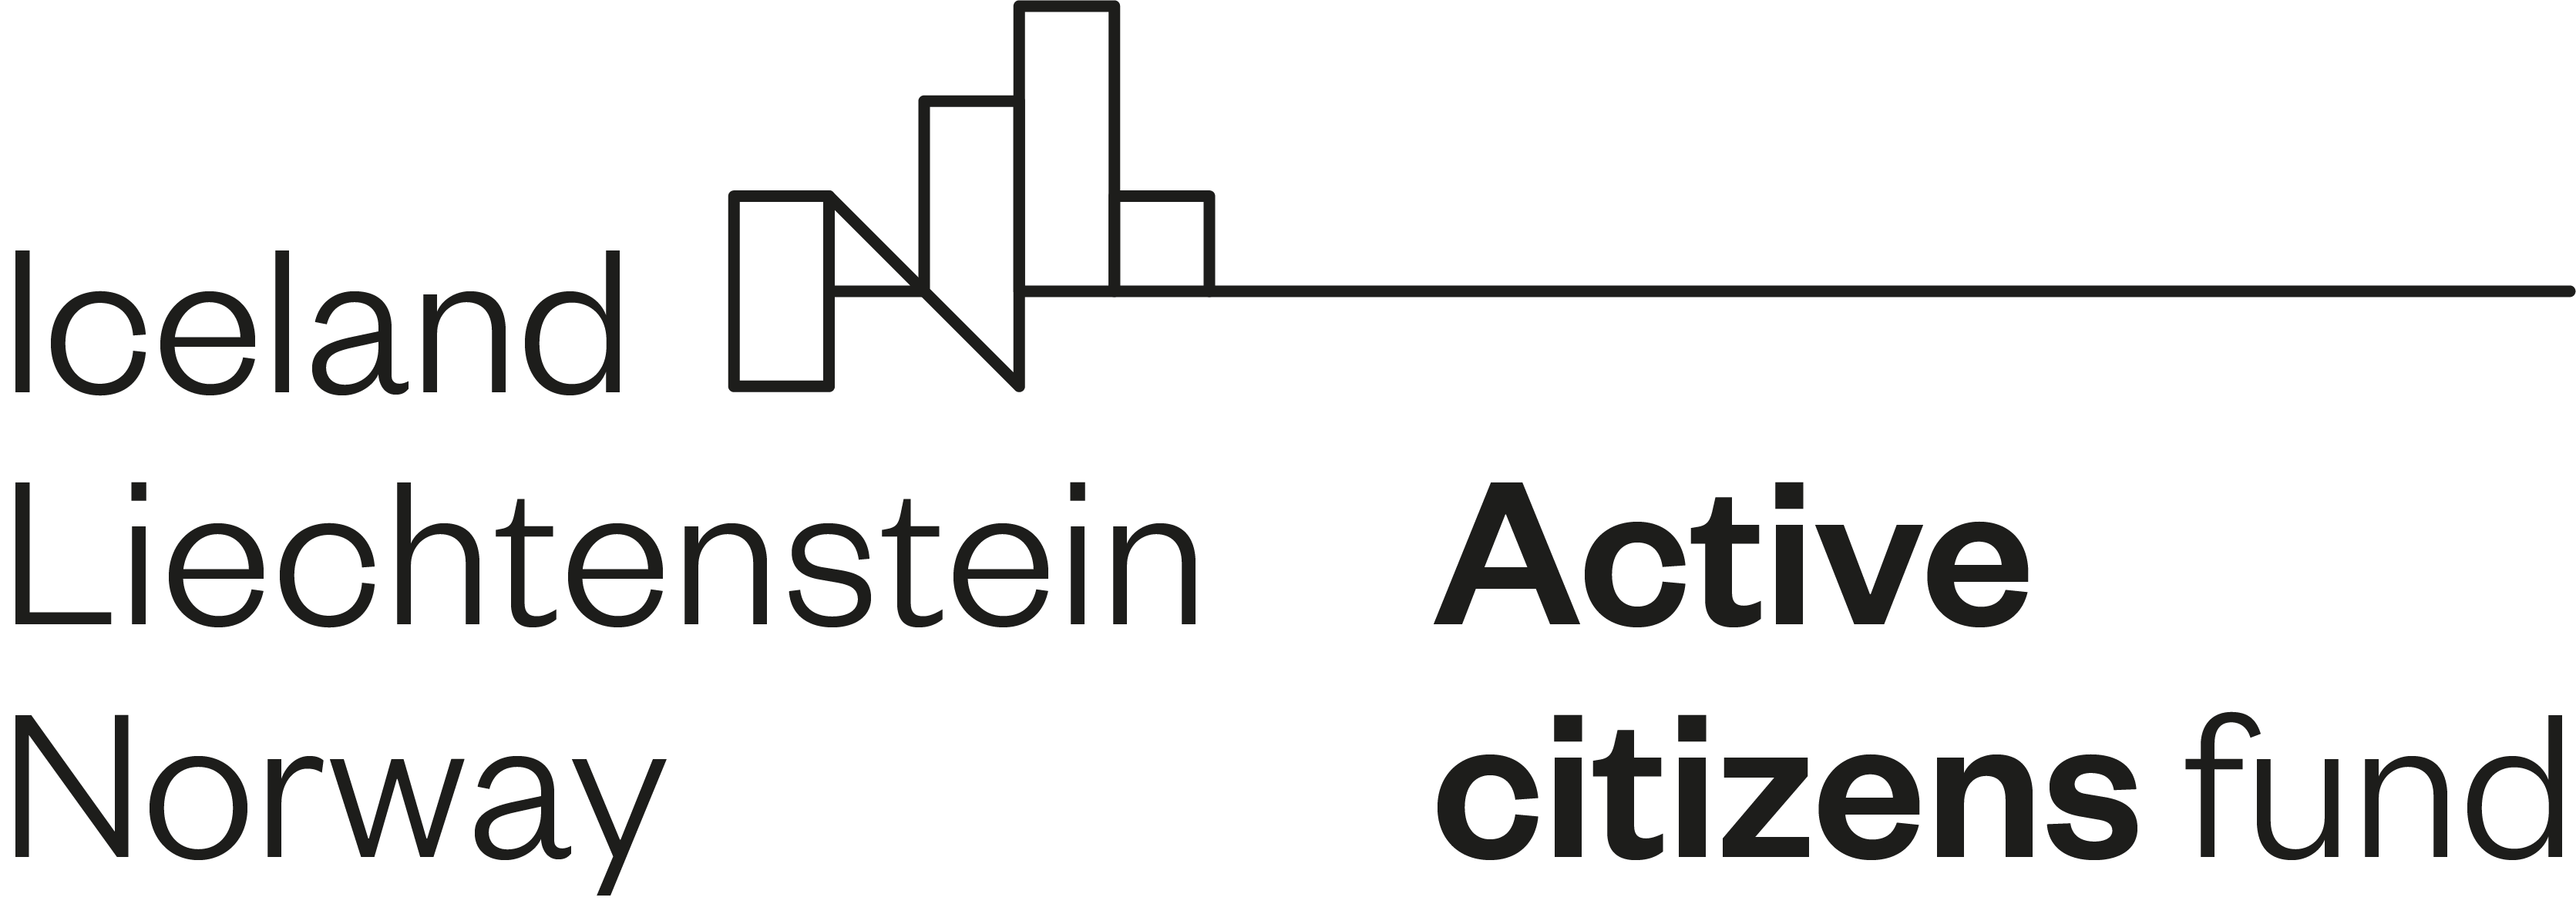 Active-citizens-fund